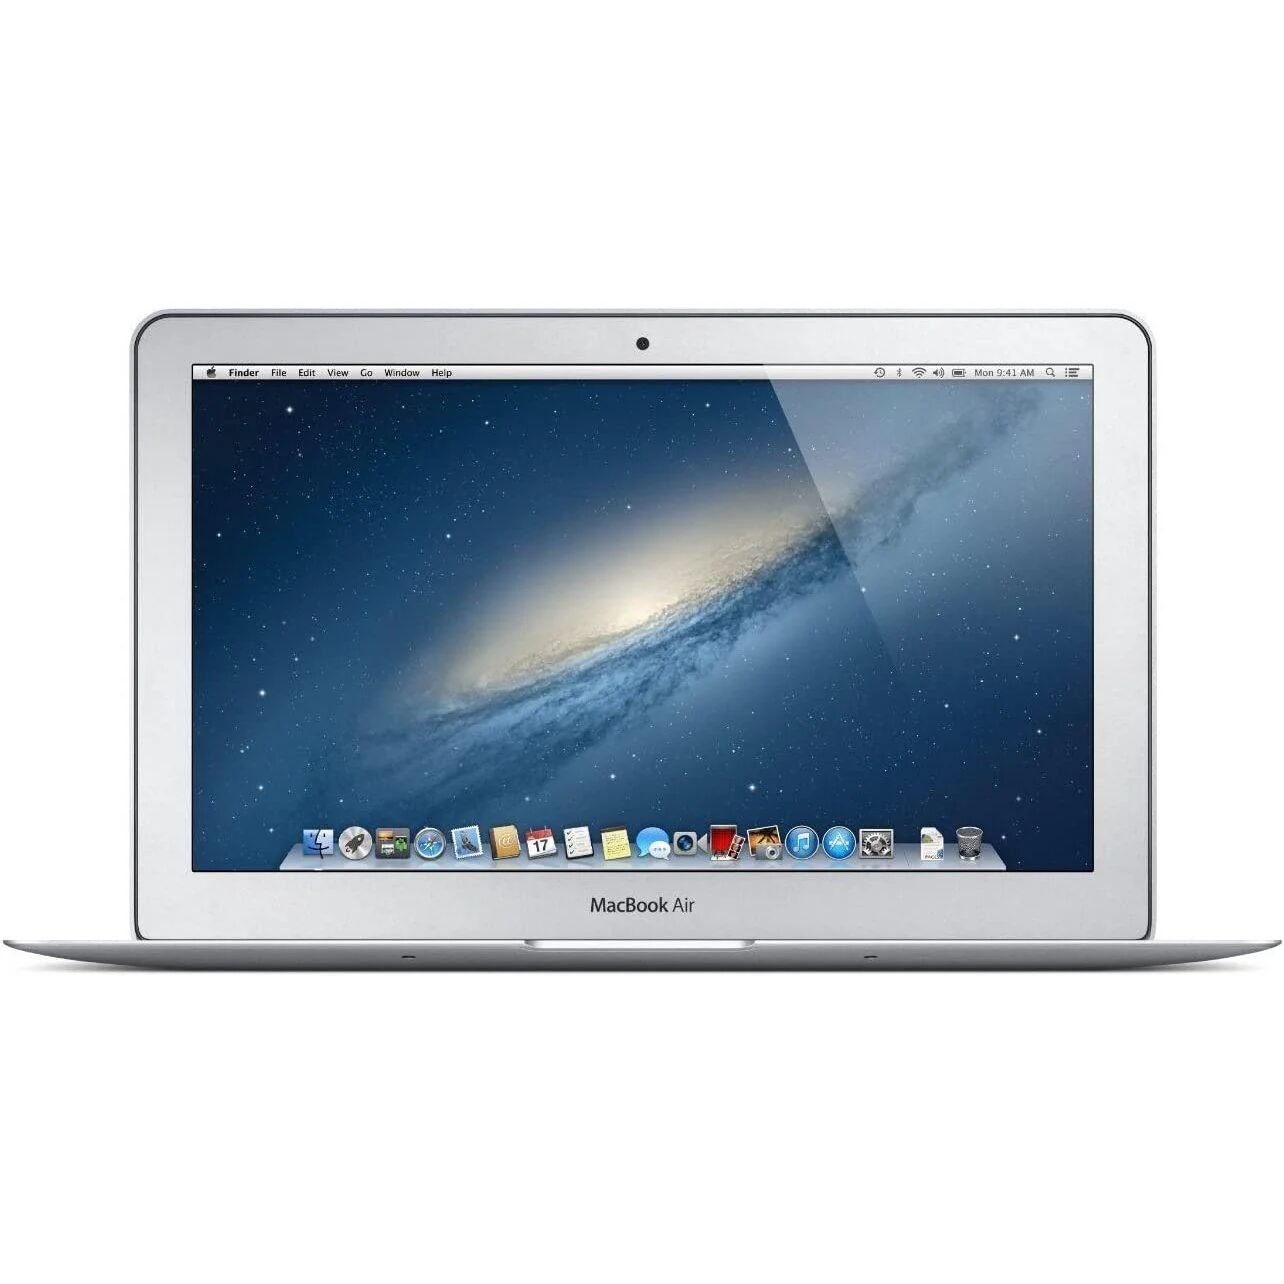 DailySale Apple MacBook Air Core i5 1.4GHz 11" MD711LLA 4GB 128GB SSD (Refurbished)